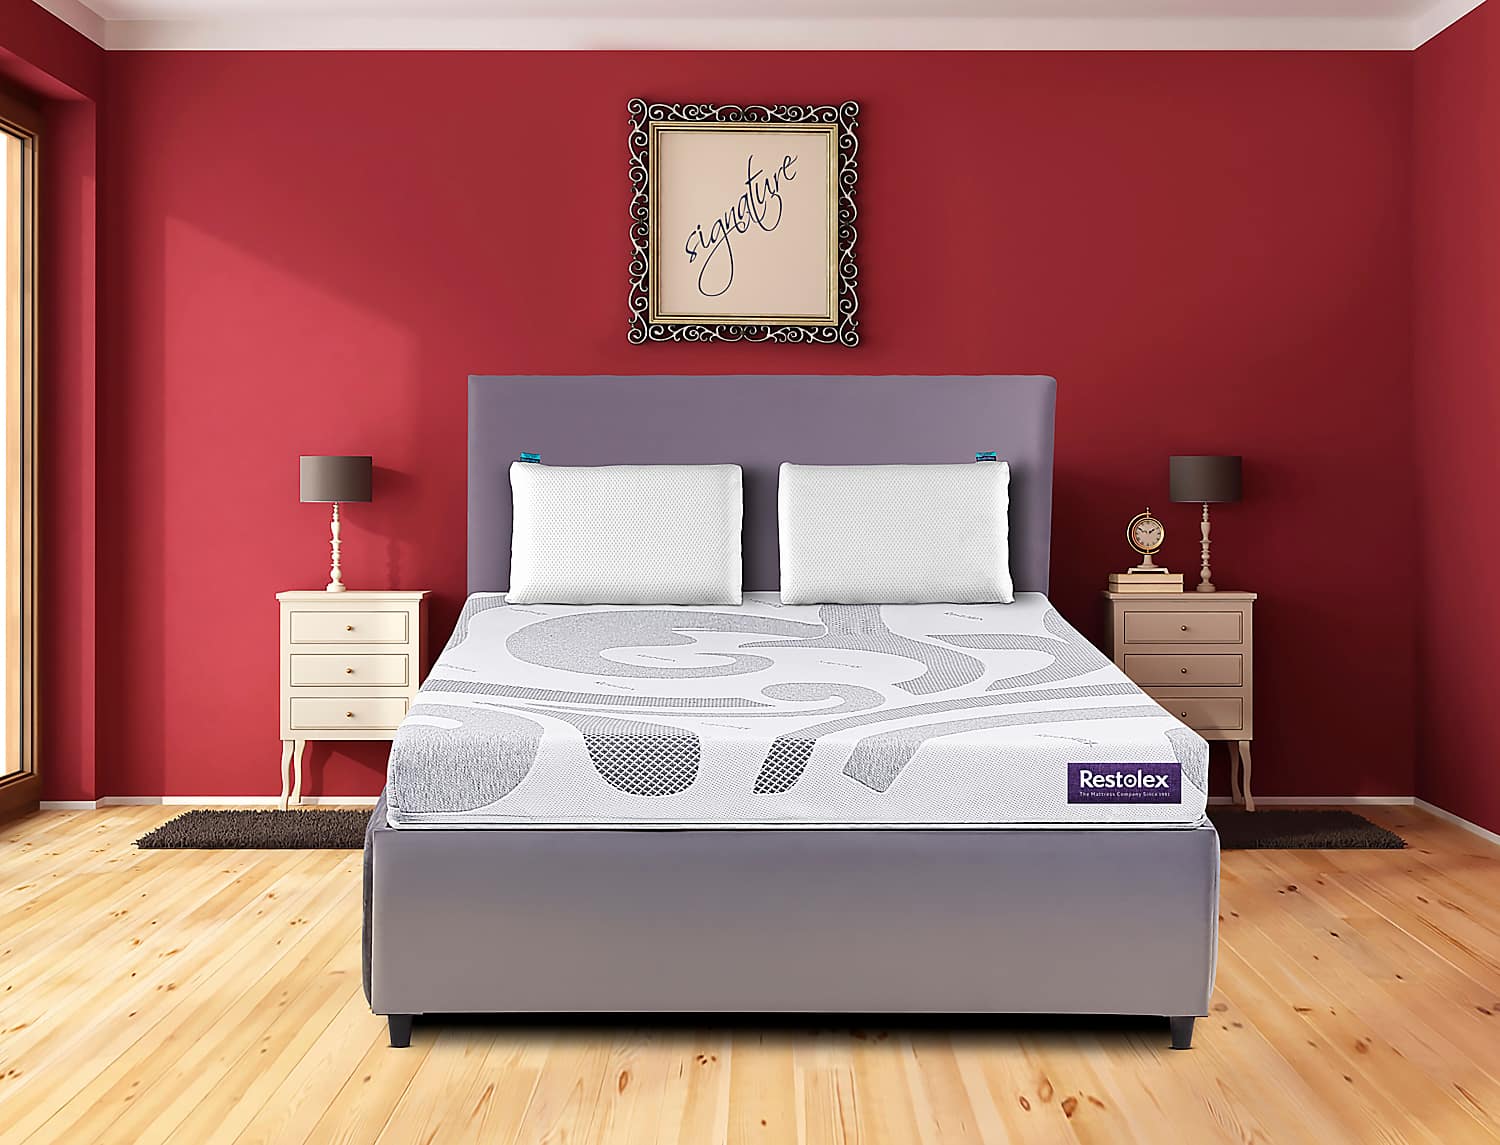 american signature foam mattress review